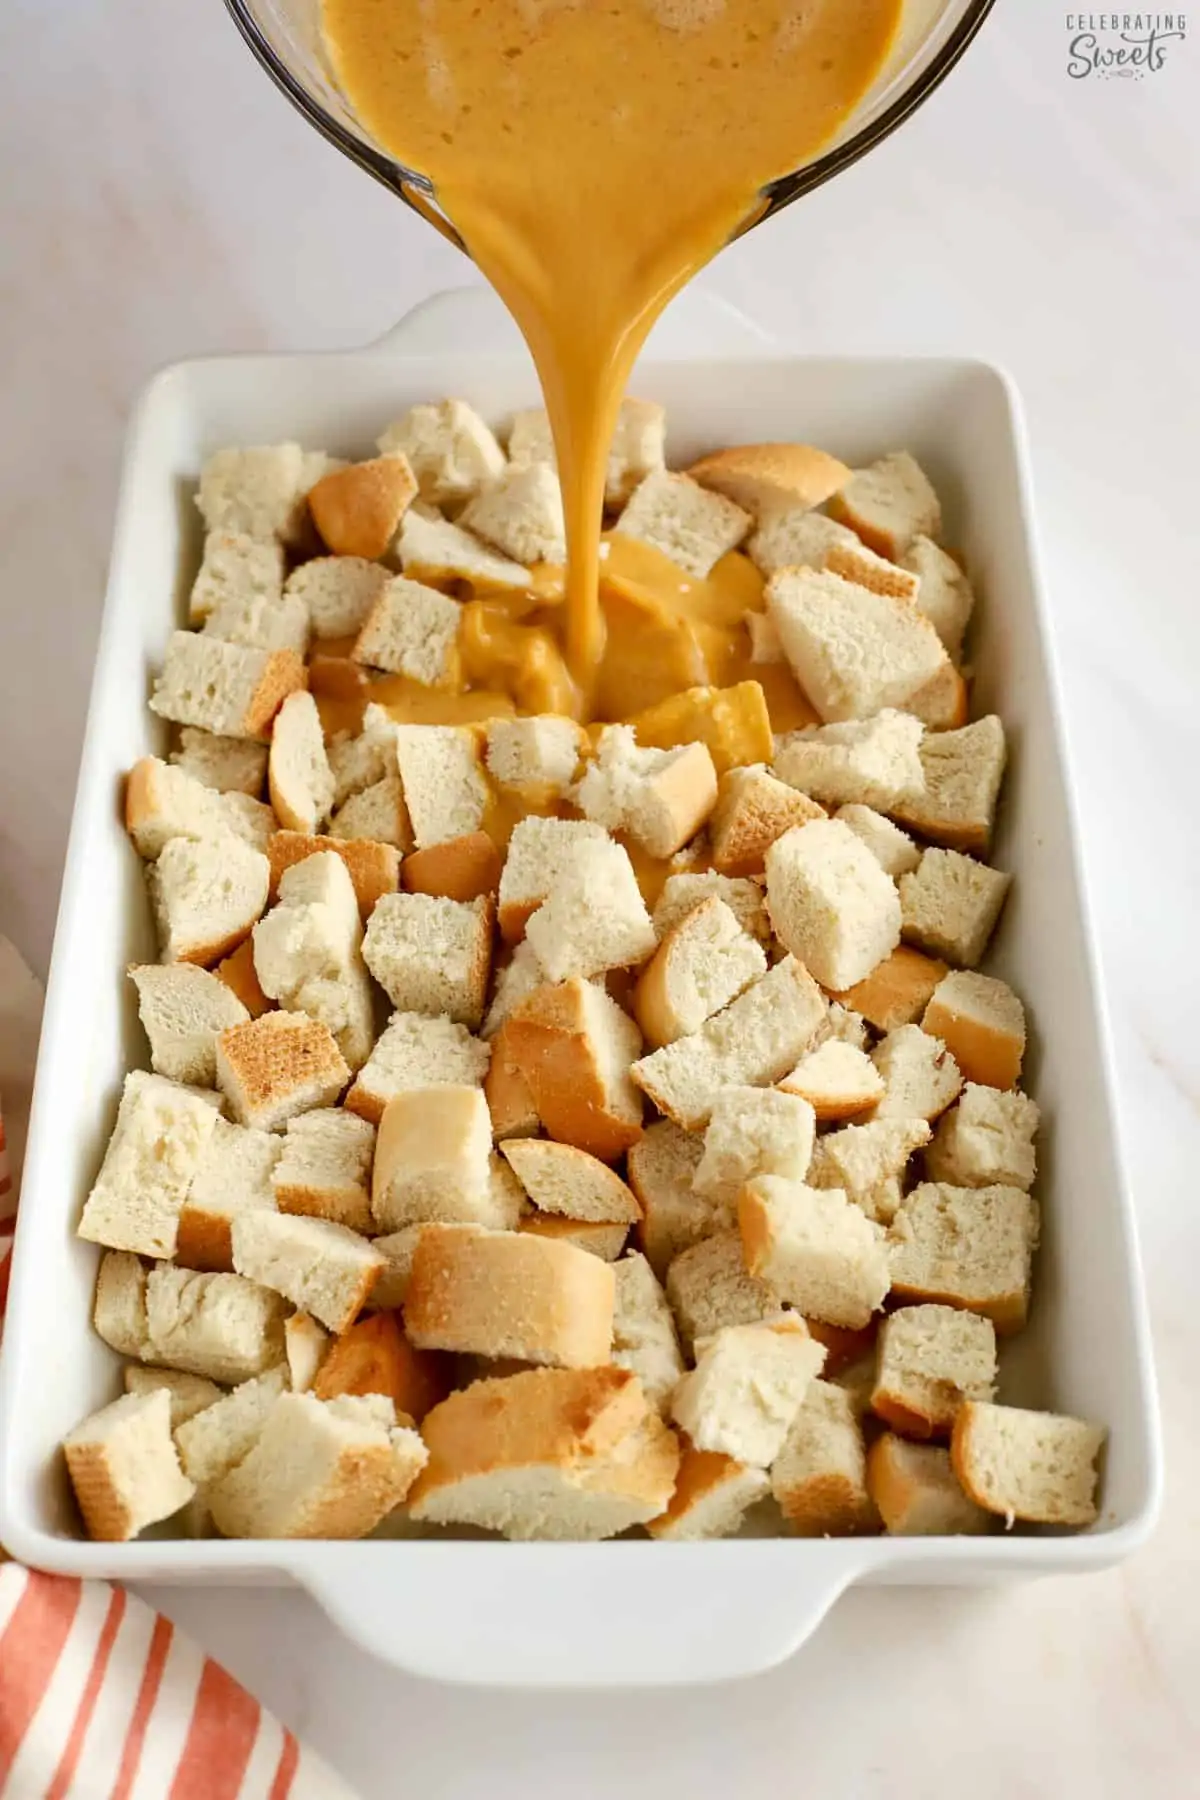 Pumpkin custard being poured over bread cubes in a casserole dish.